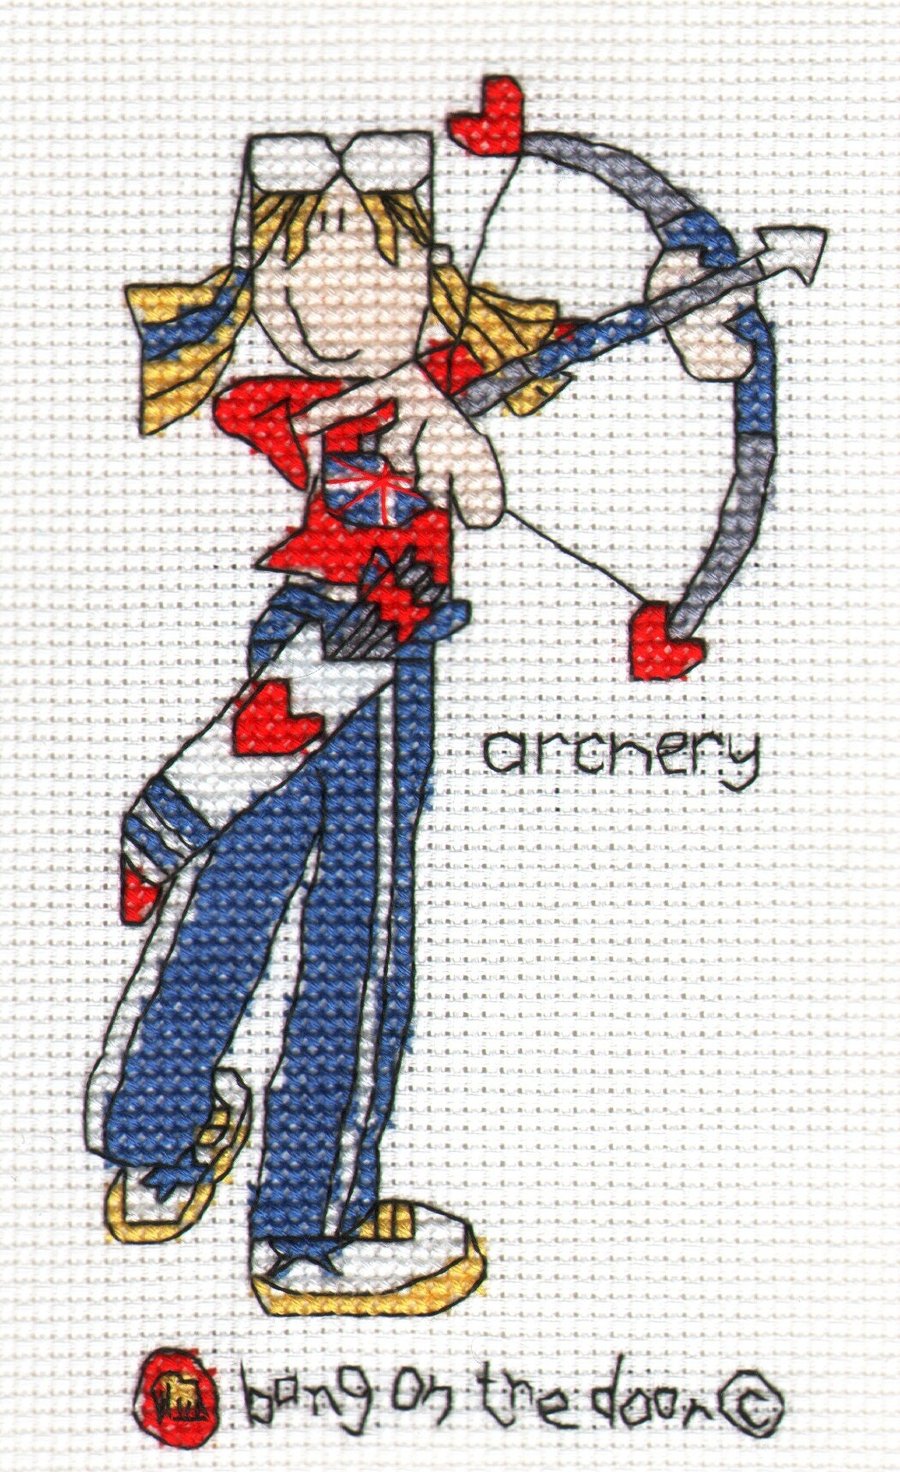 Bang on the door - mini archery cross stitch chart